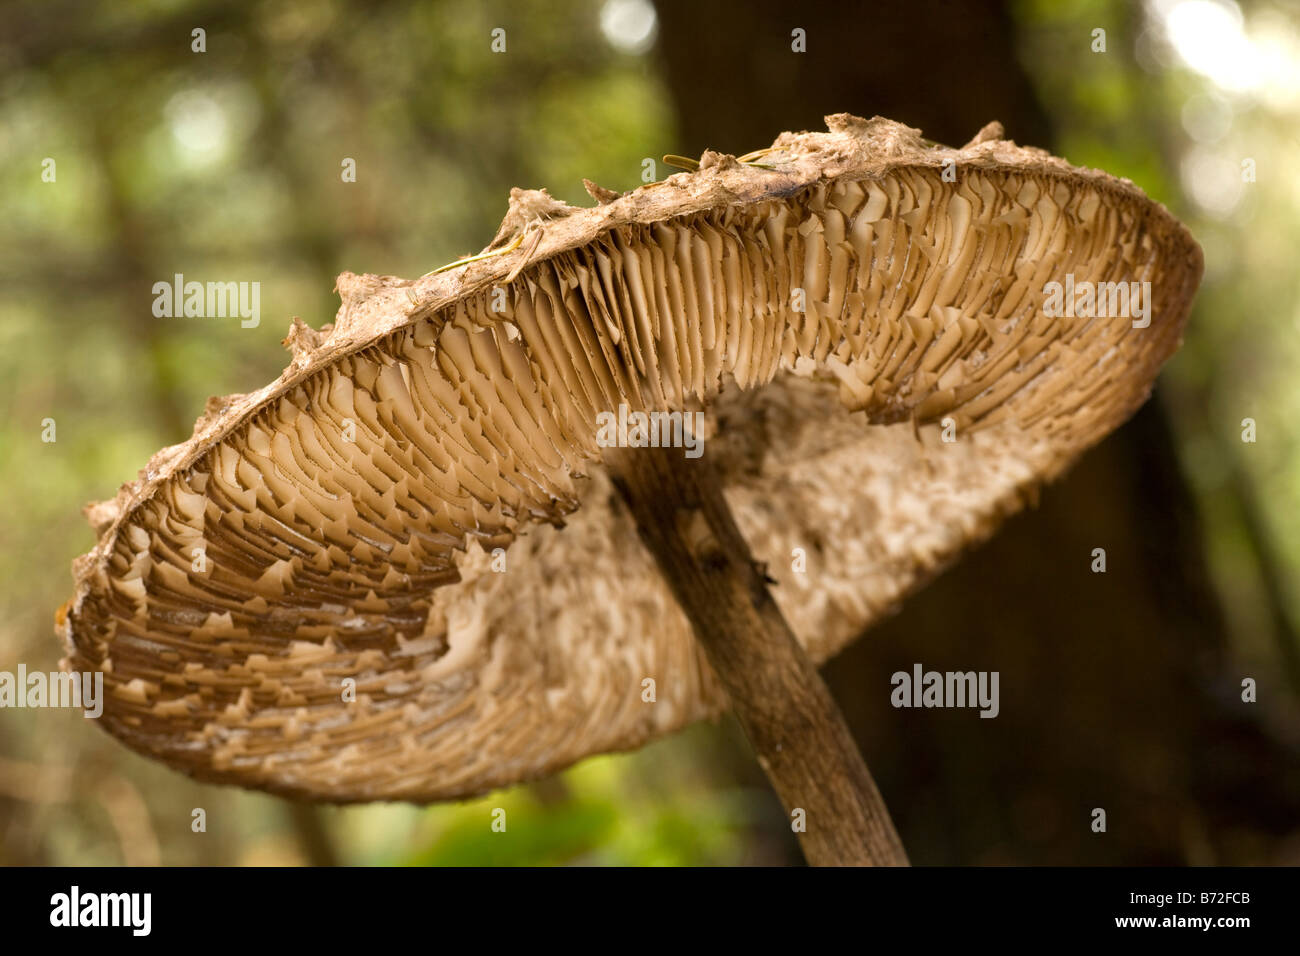 parasol mushroom from below Stock Photo